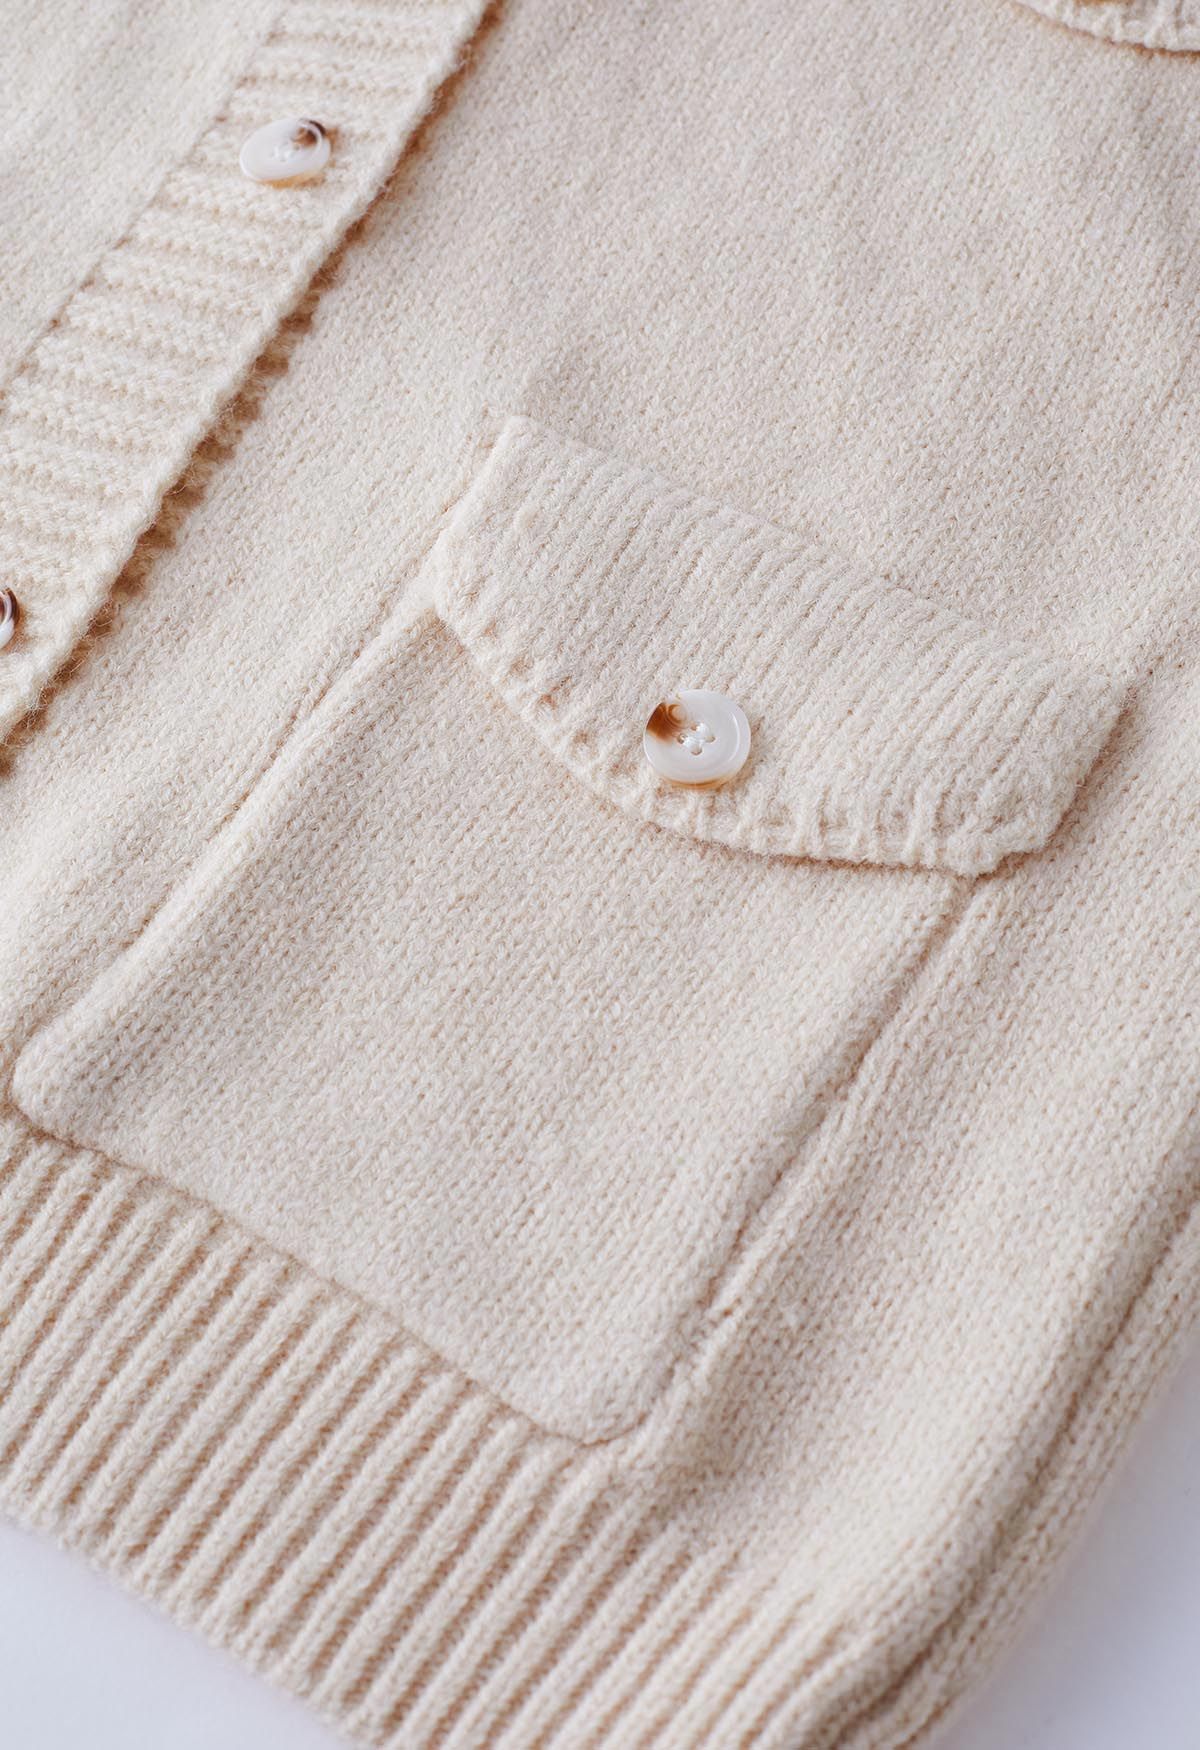 Flap Pocket Button Down Knit Vest in Cream